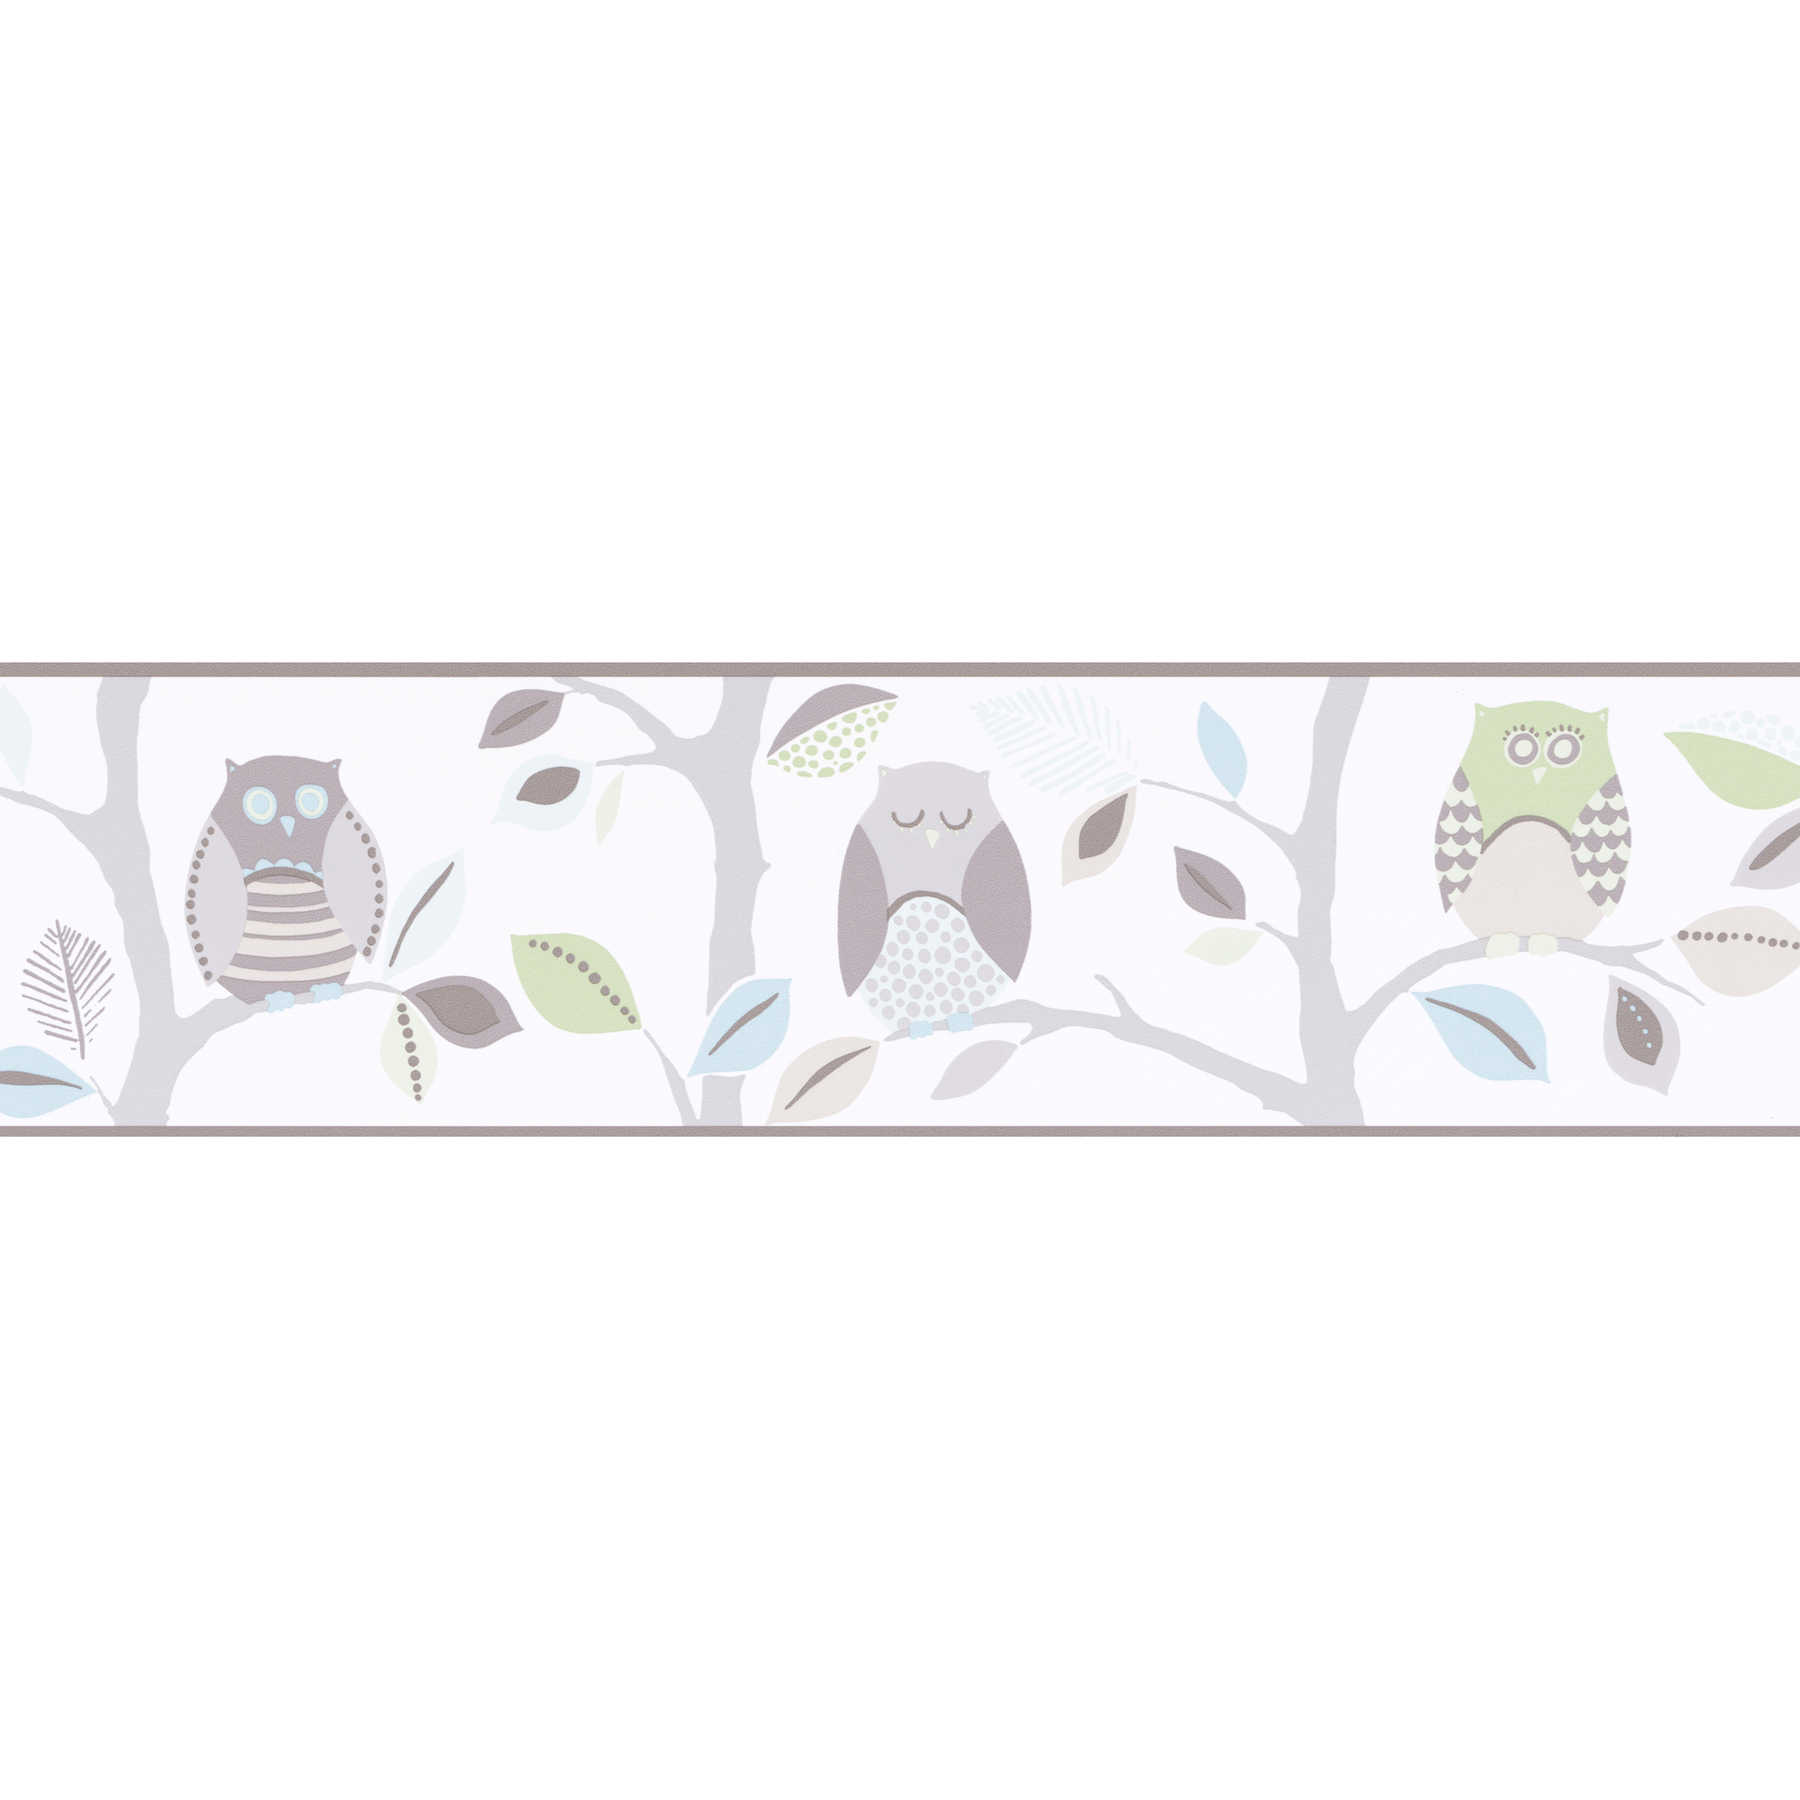 Owls wallpaper border for Nursery - beige, grey, green
